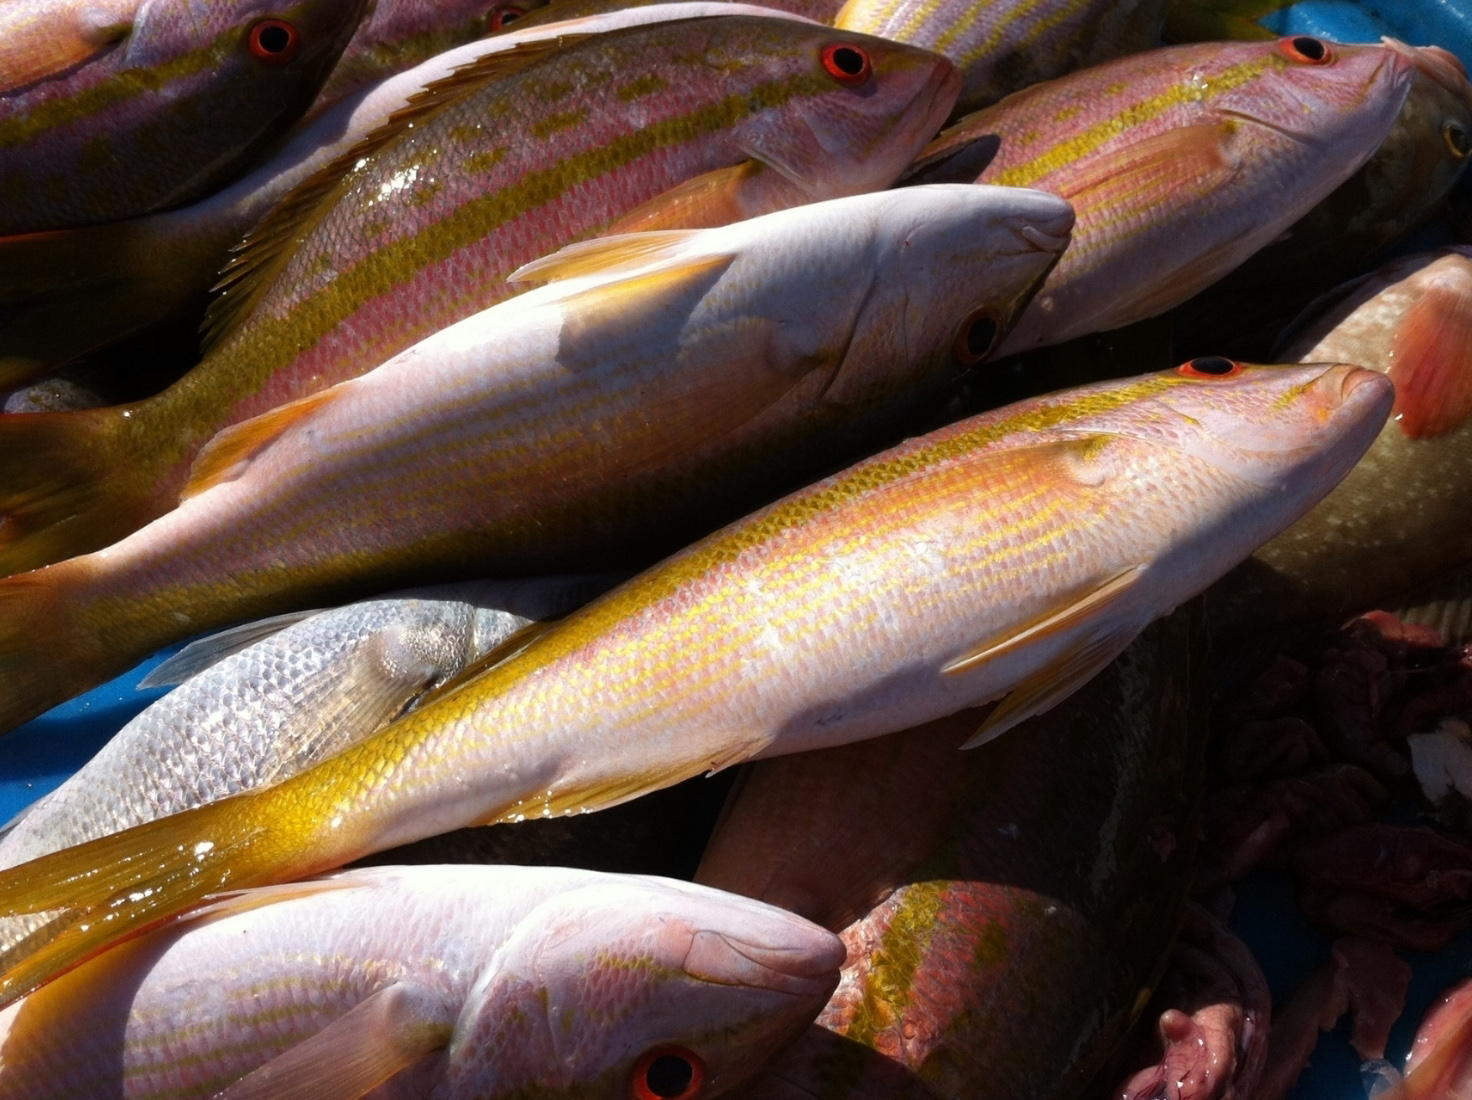  - Fish from Rio Lagartos, Yucatan